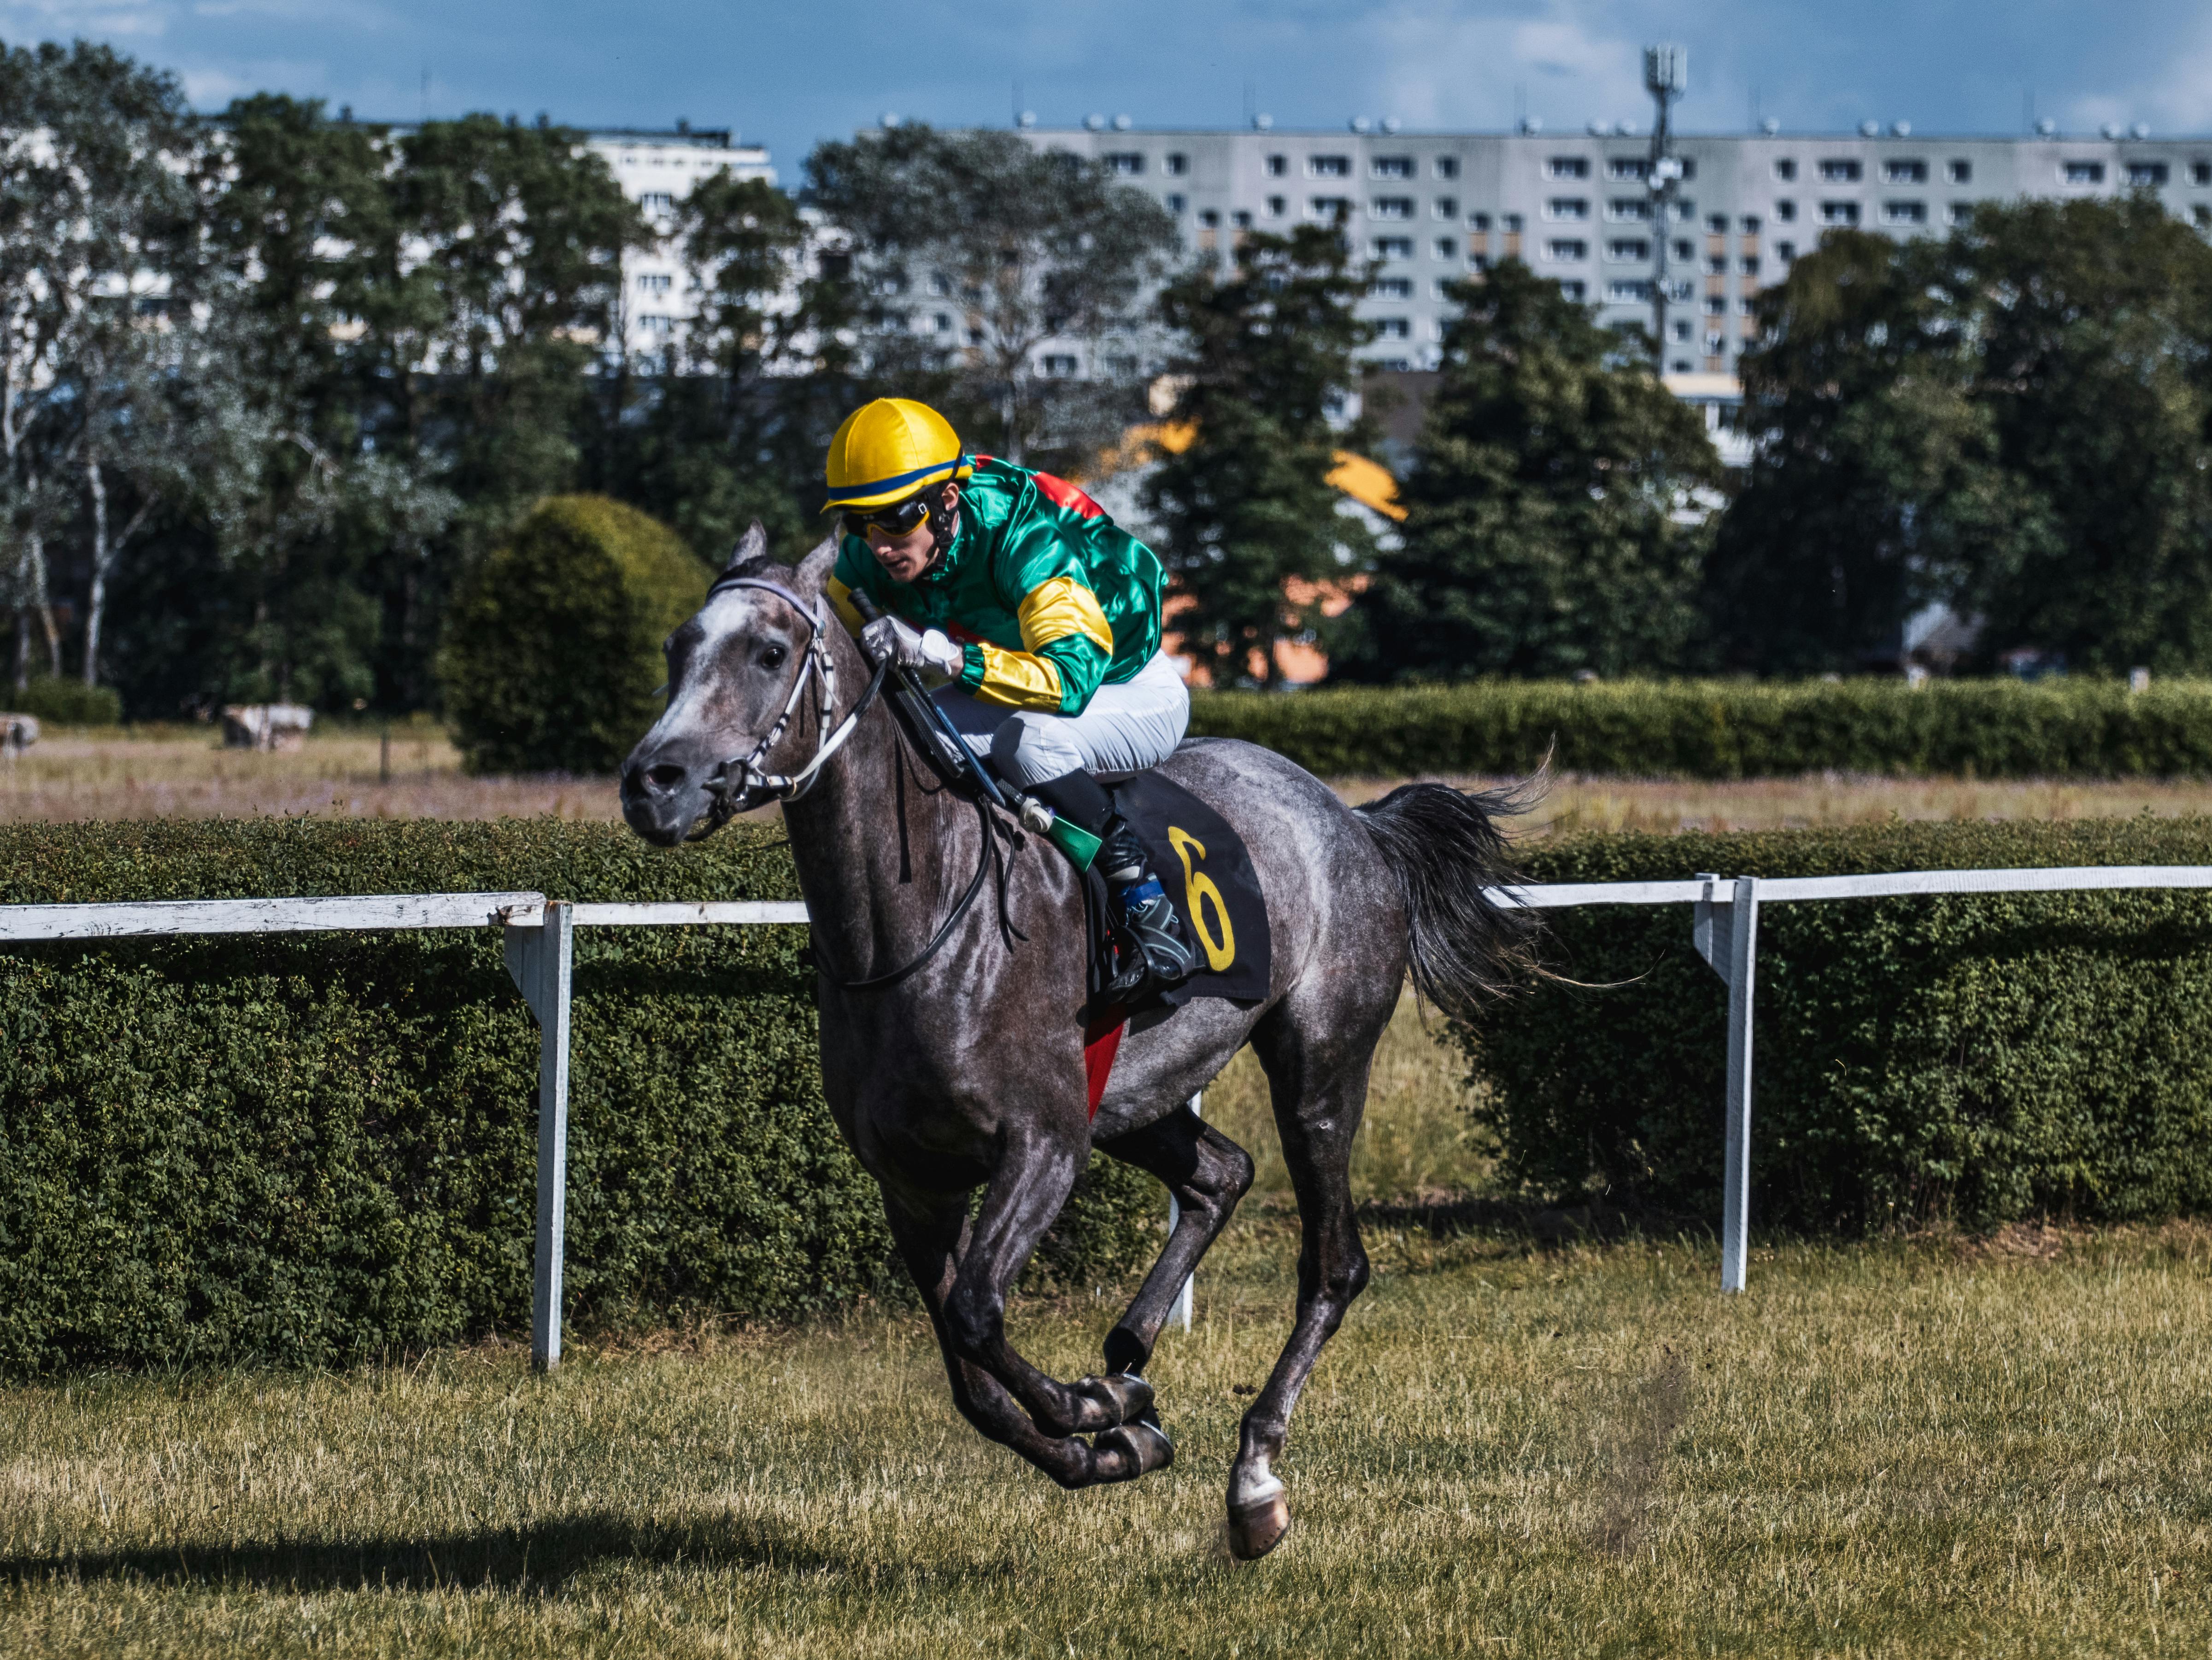 a person in green uniform wearing helmet riding a running horse